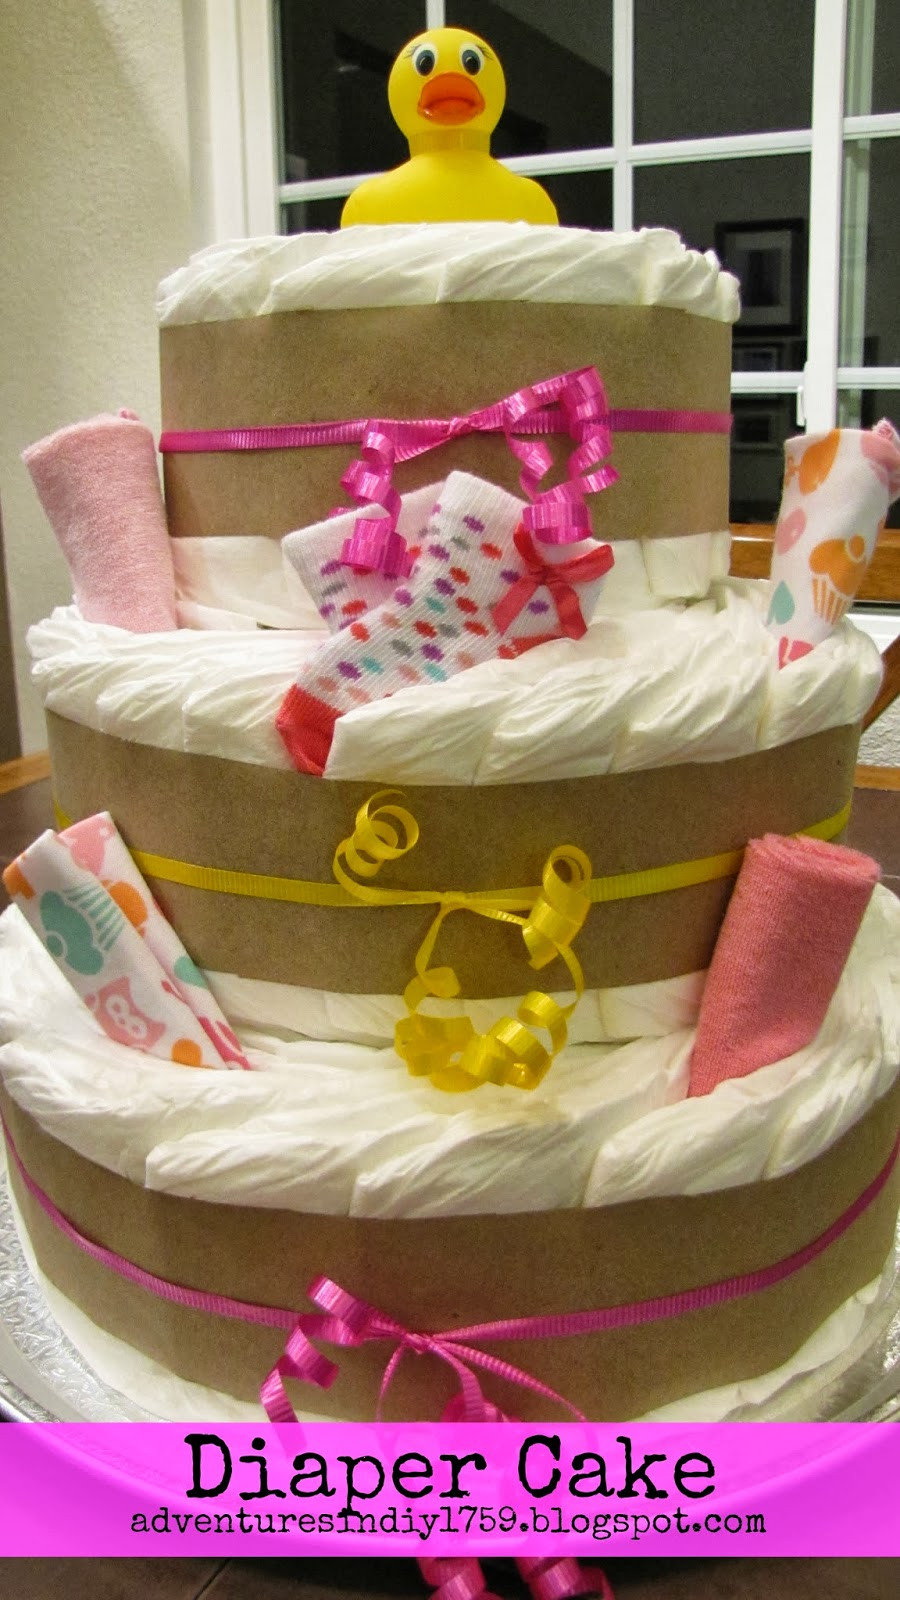 DIY Baby Shower Cake
 Adventures in DIY Baby Shower Diaper Cake